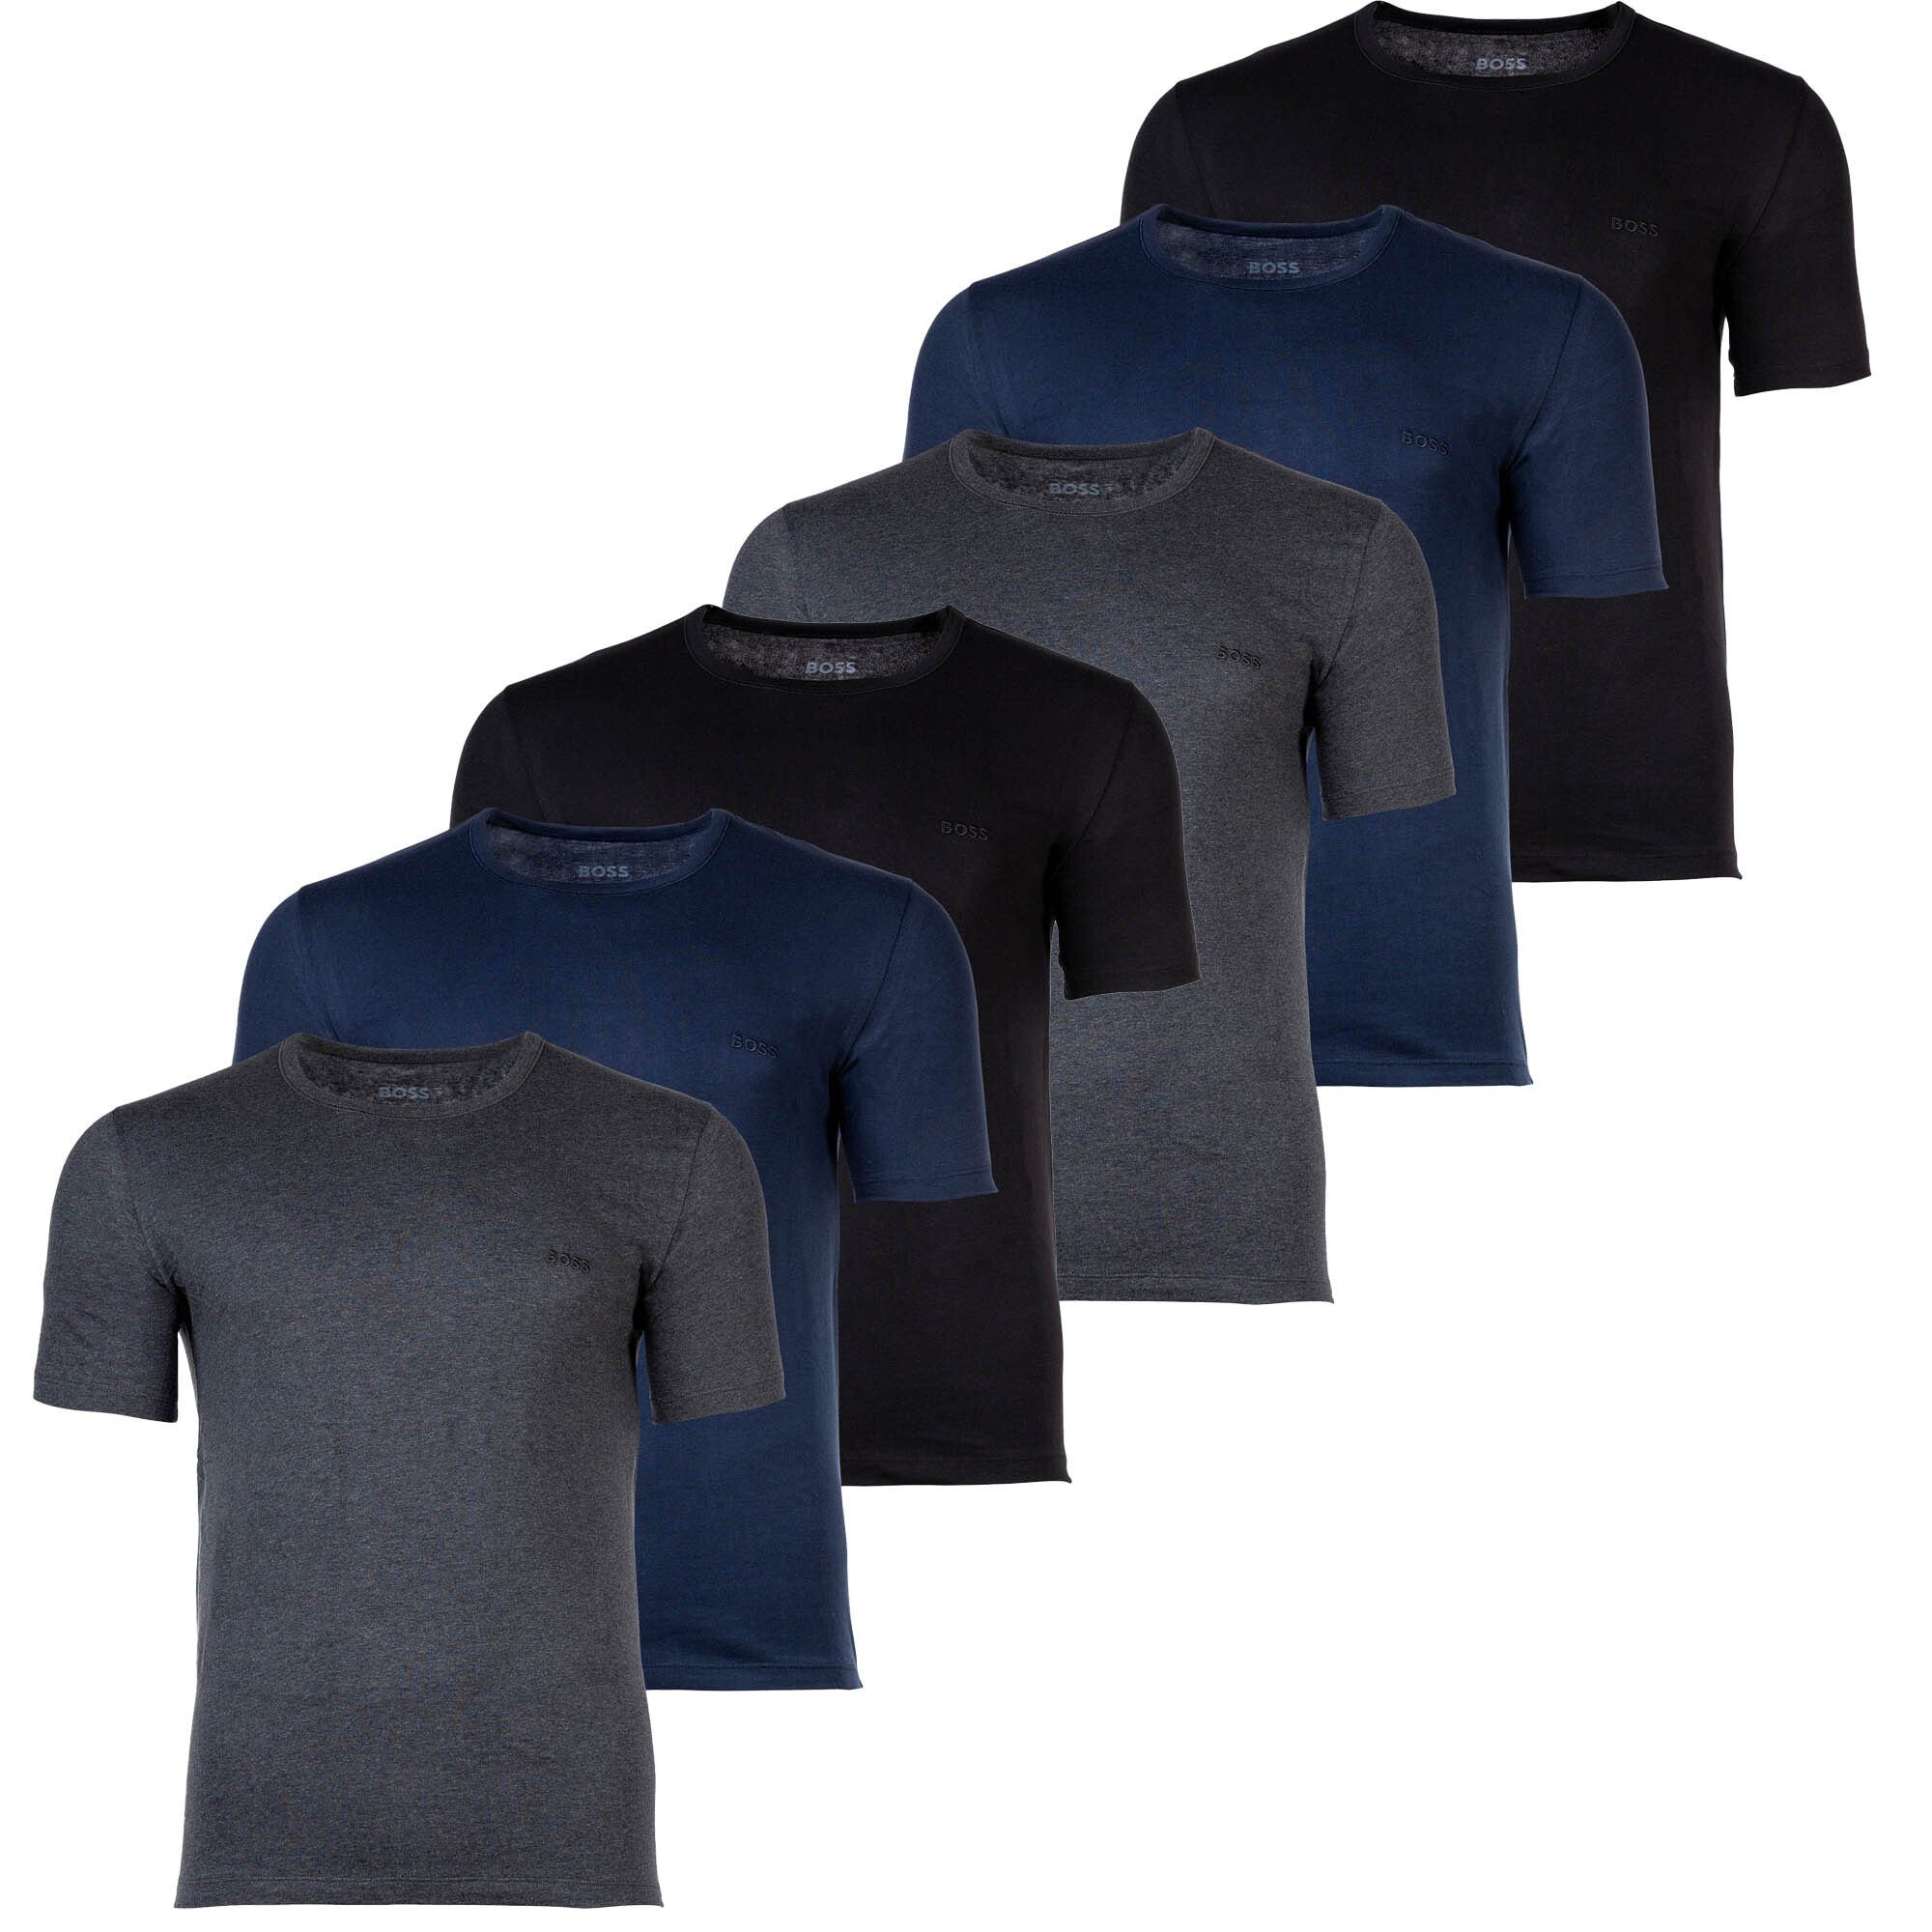 BOSS T-Shirt Rundhals - Pack T-Shirt, RN Herren Blau/Grau/Schwarz Classic, 6er